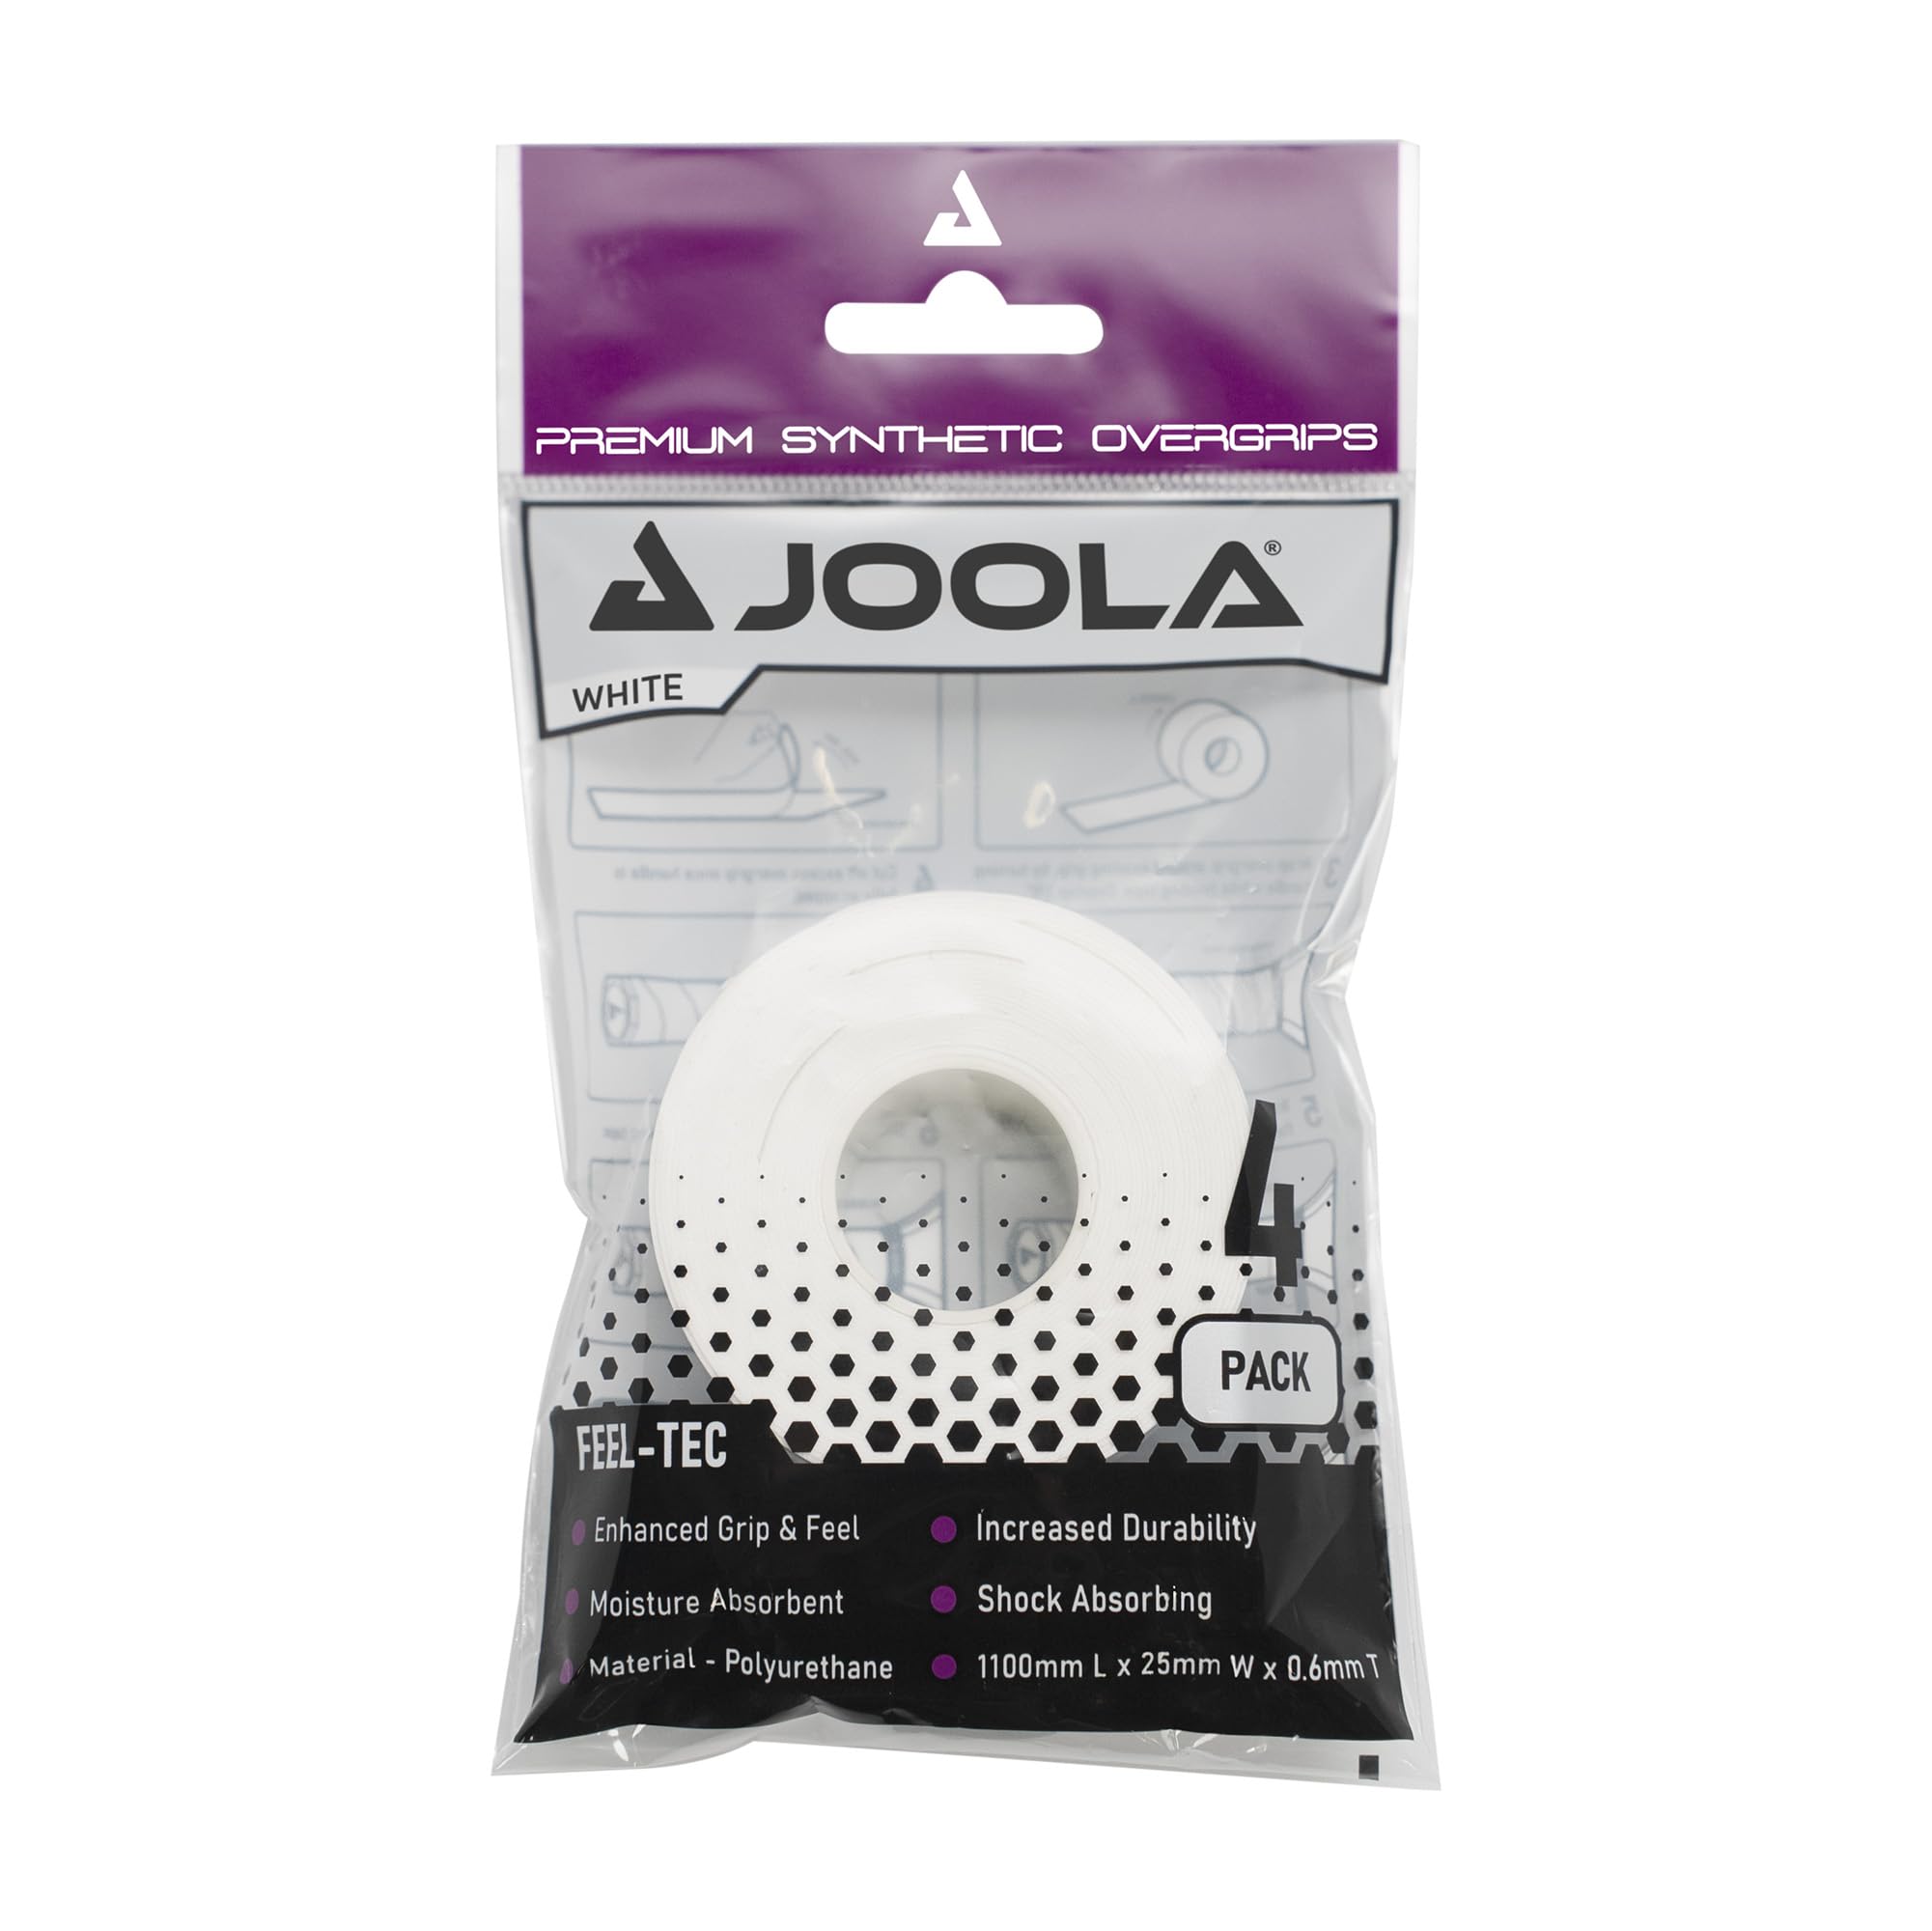 JOOLA Pickleball Overgrip - Tacky Feel Premium Synthetic Overgrips - Set of 4 - Pickleball Grip Tape for Any Brand Racket - Anti Slip Pickleball Tape Fits Elongated, Standard & Skinny Handles,White